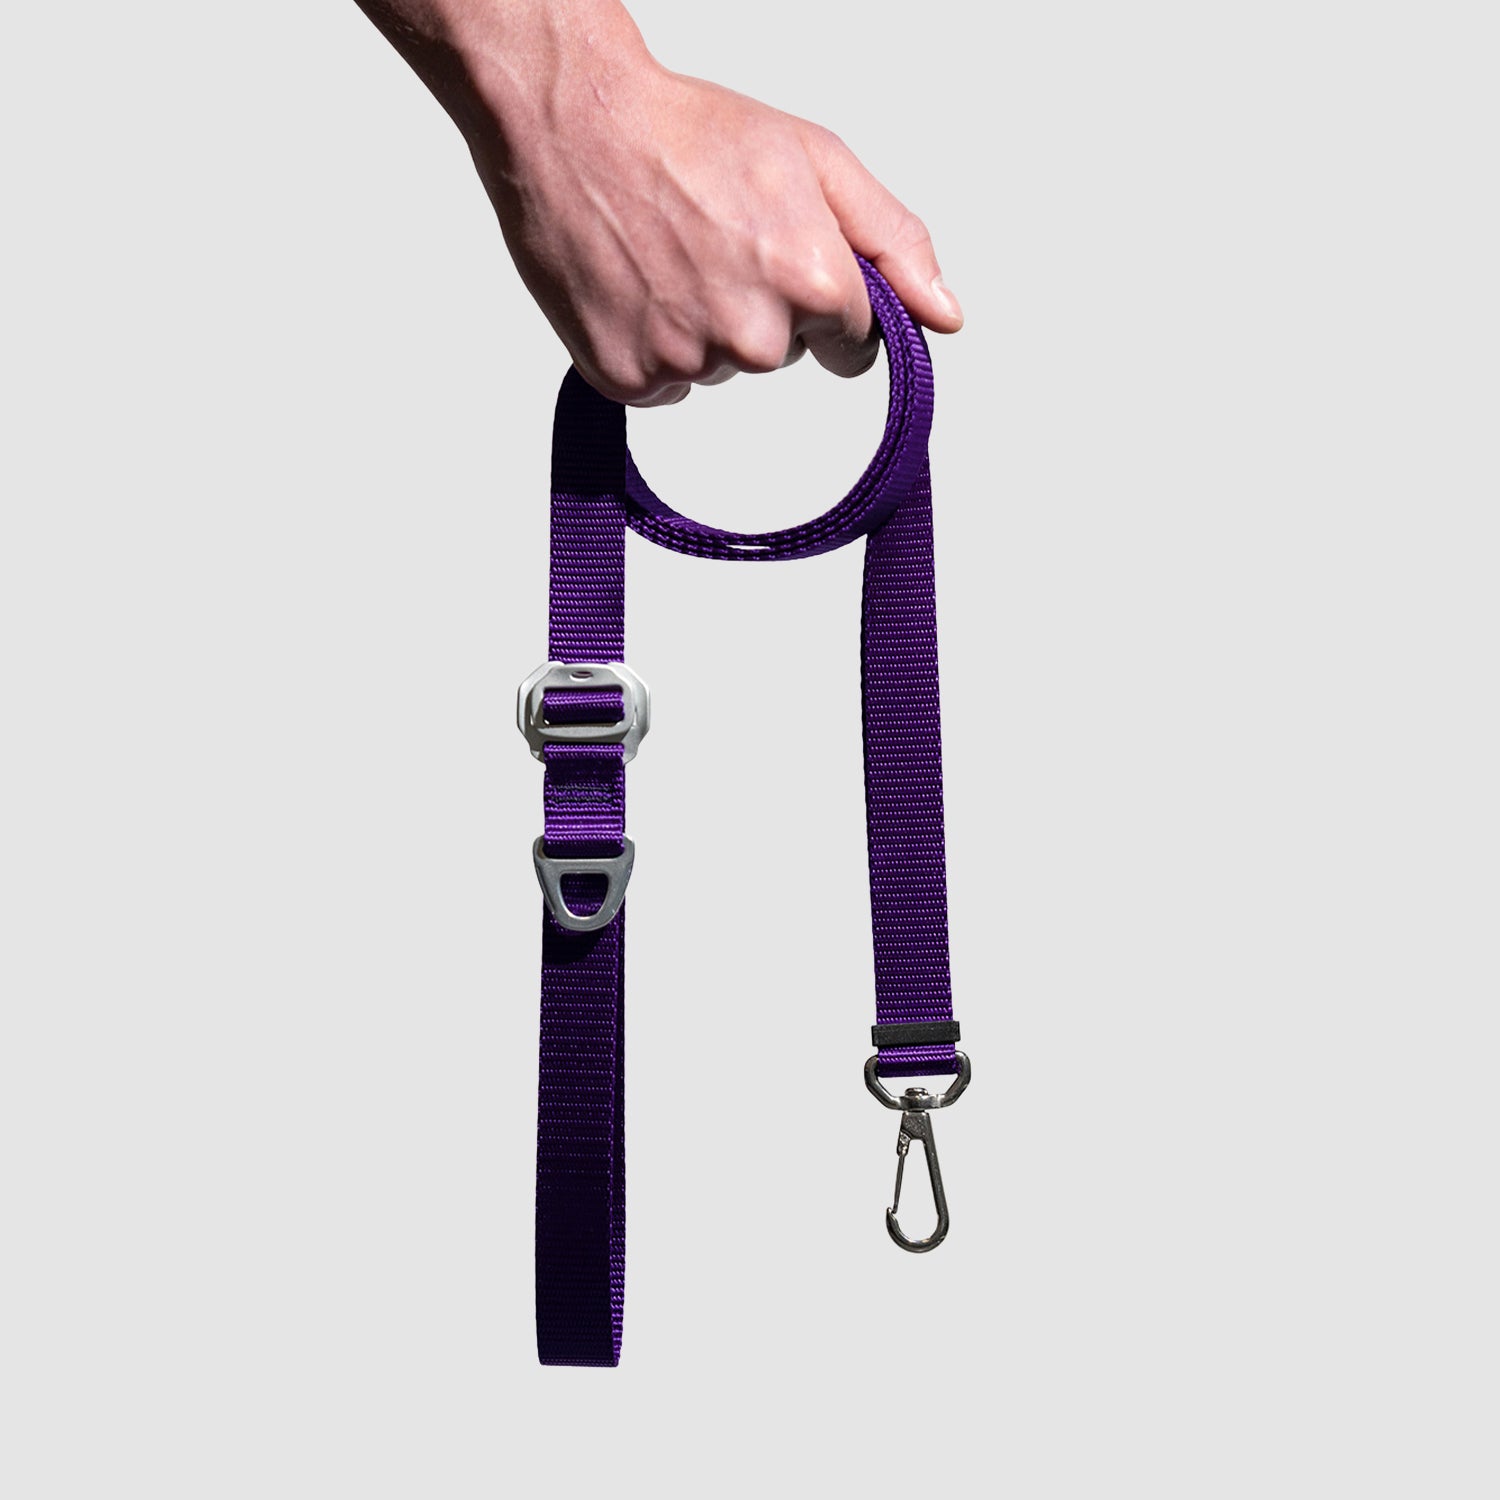 lifetime lite adjustable leash for active dogs handmade in colorado by atlas pet company --violet